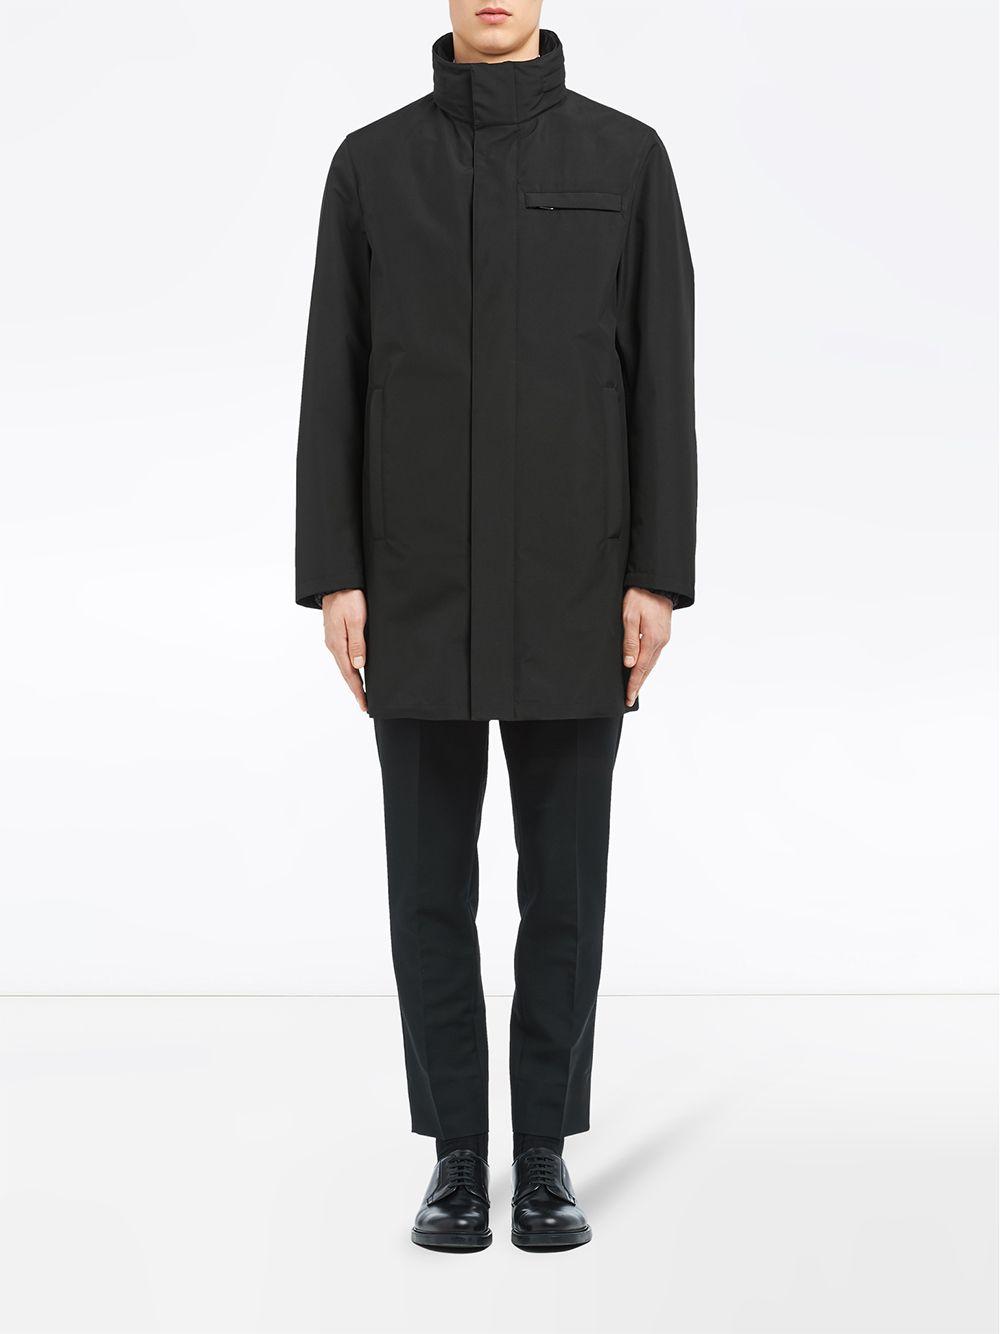 Prada Synthetic Technical Fabric Raincoat in Black for Men - Lyst